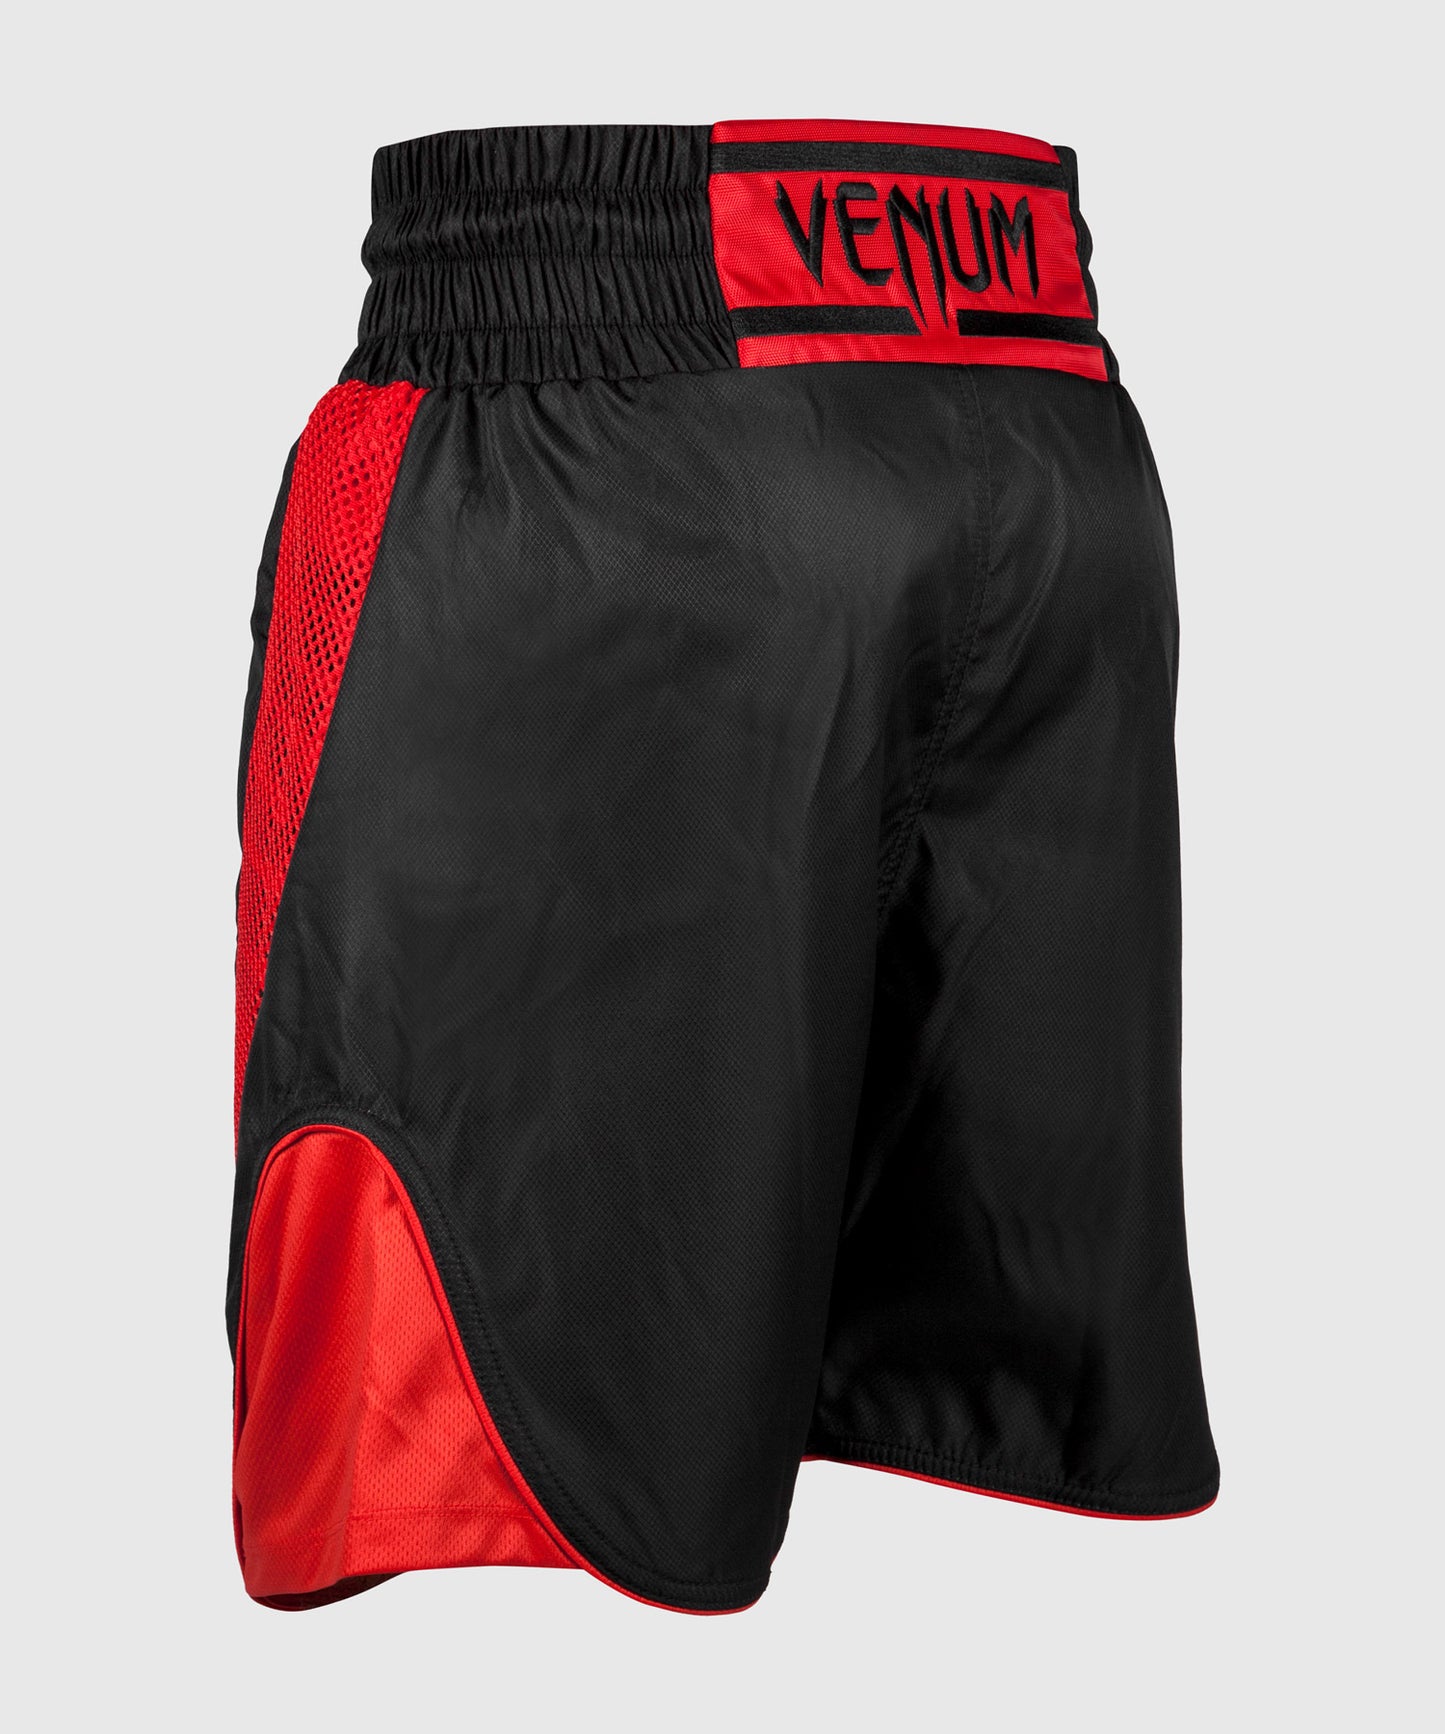 Venum Elite Boxing-Shorts - Zwart/Rood